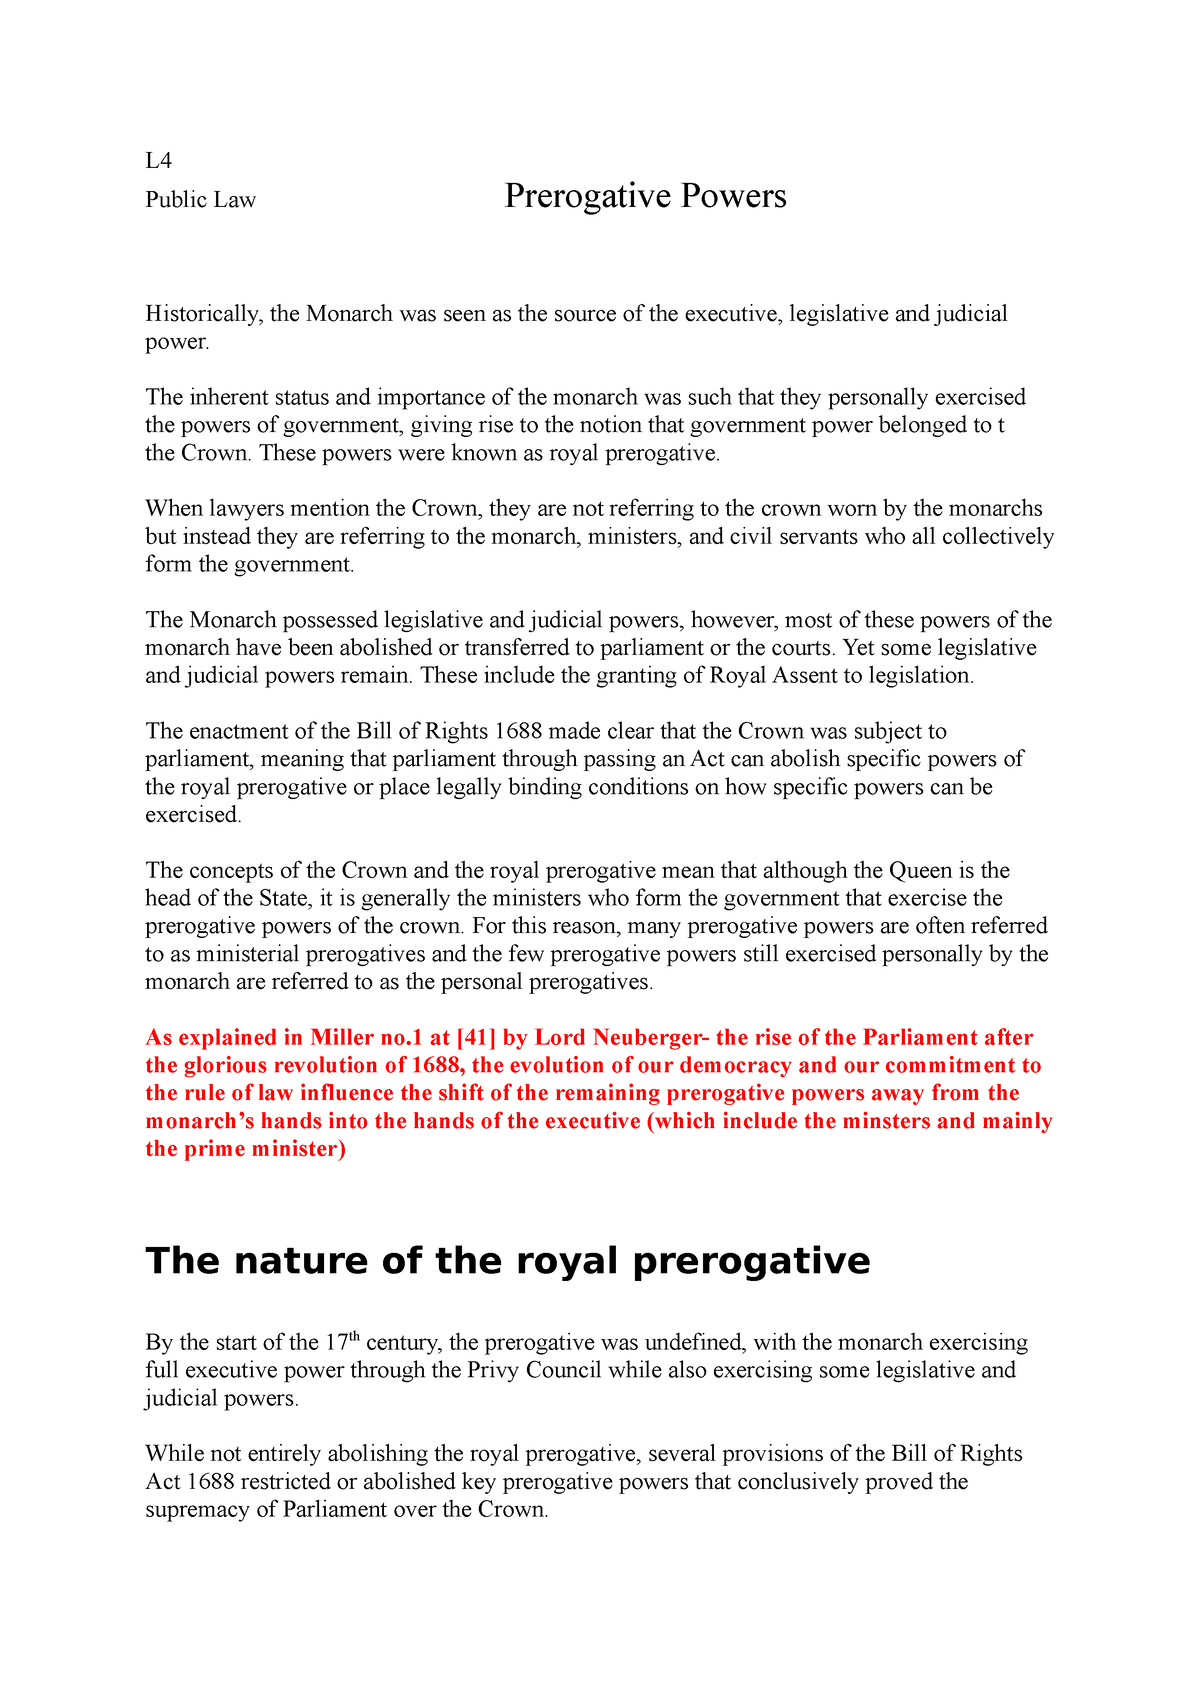 royal prerogative public law essay